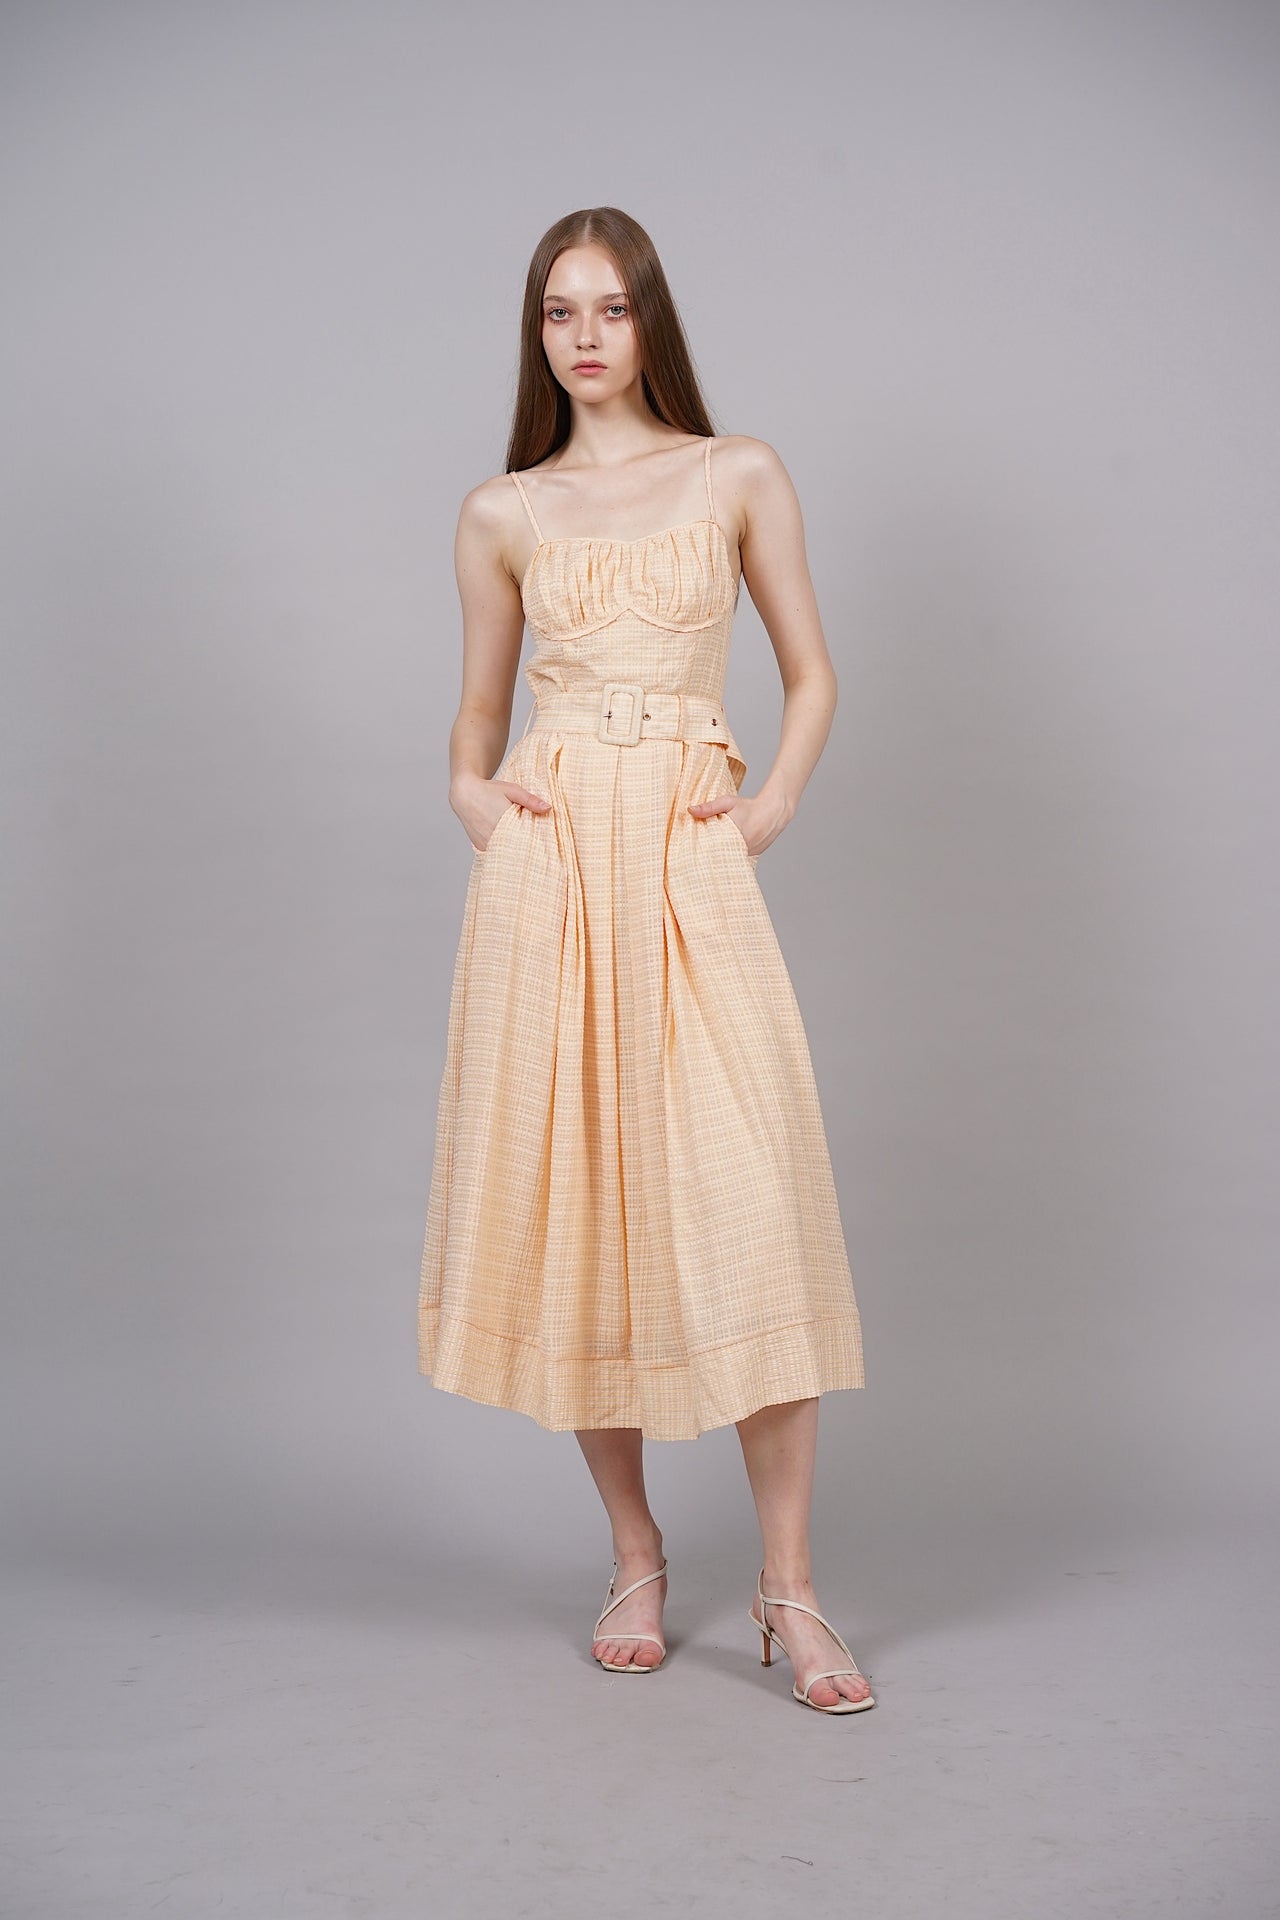 Textured Checks Midi Dress in Apricot